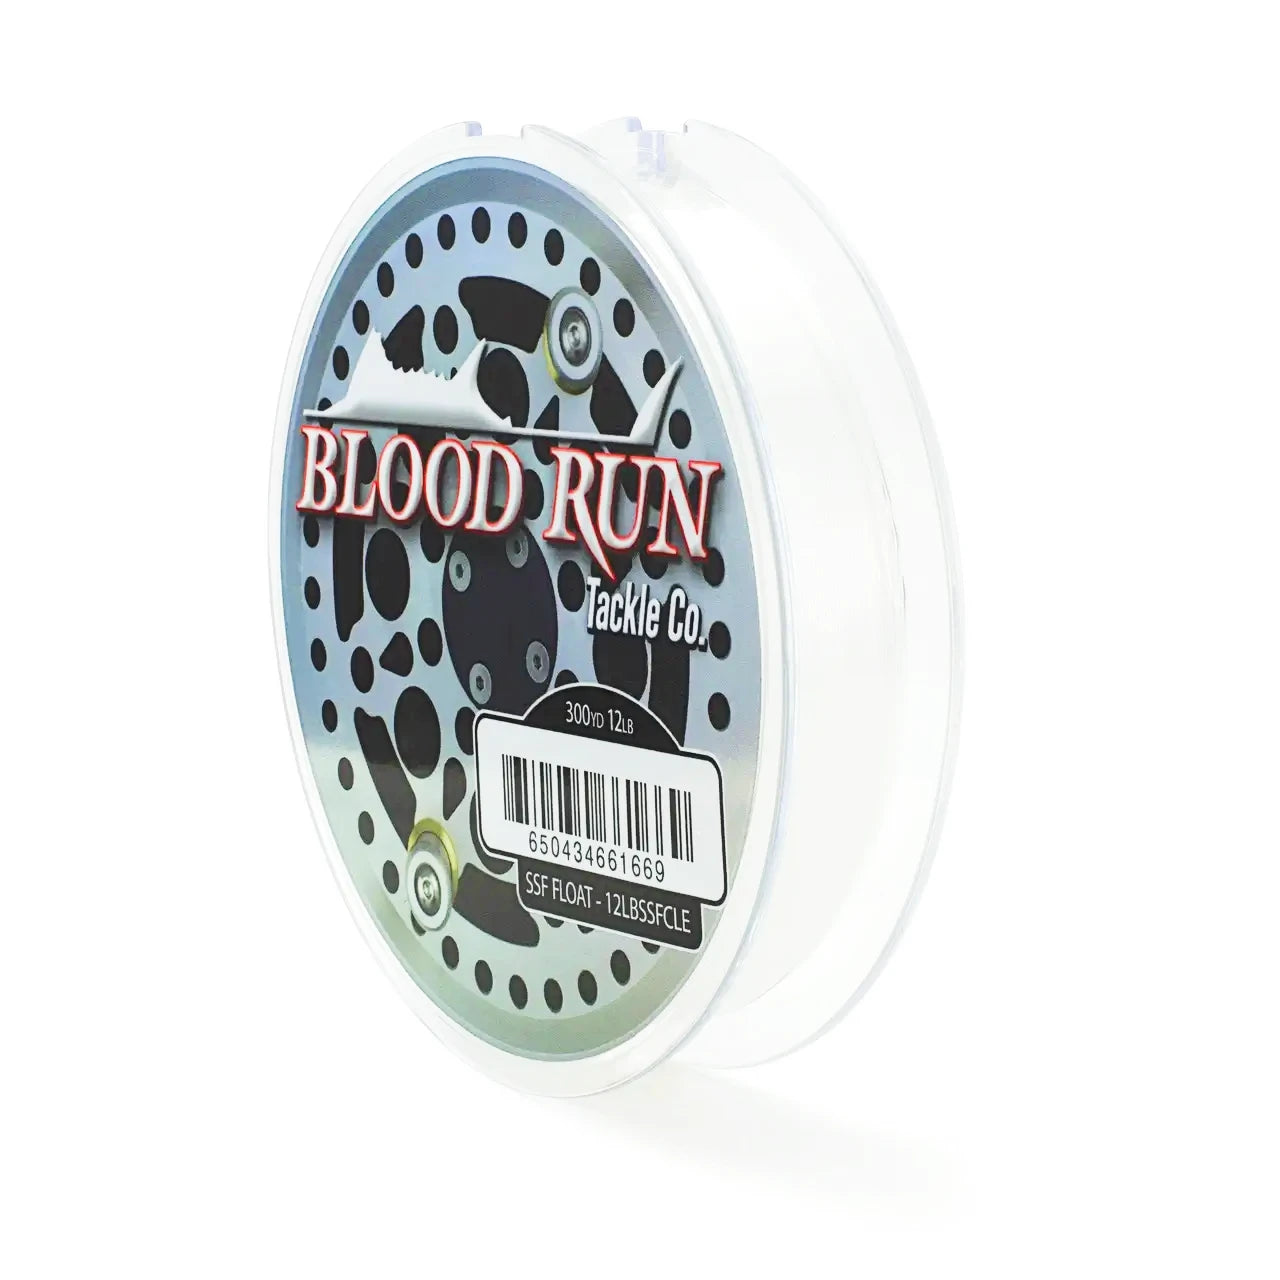 Products – Blood Run Fishing